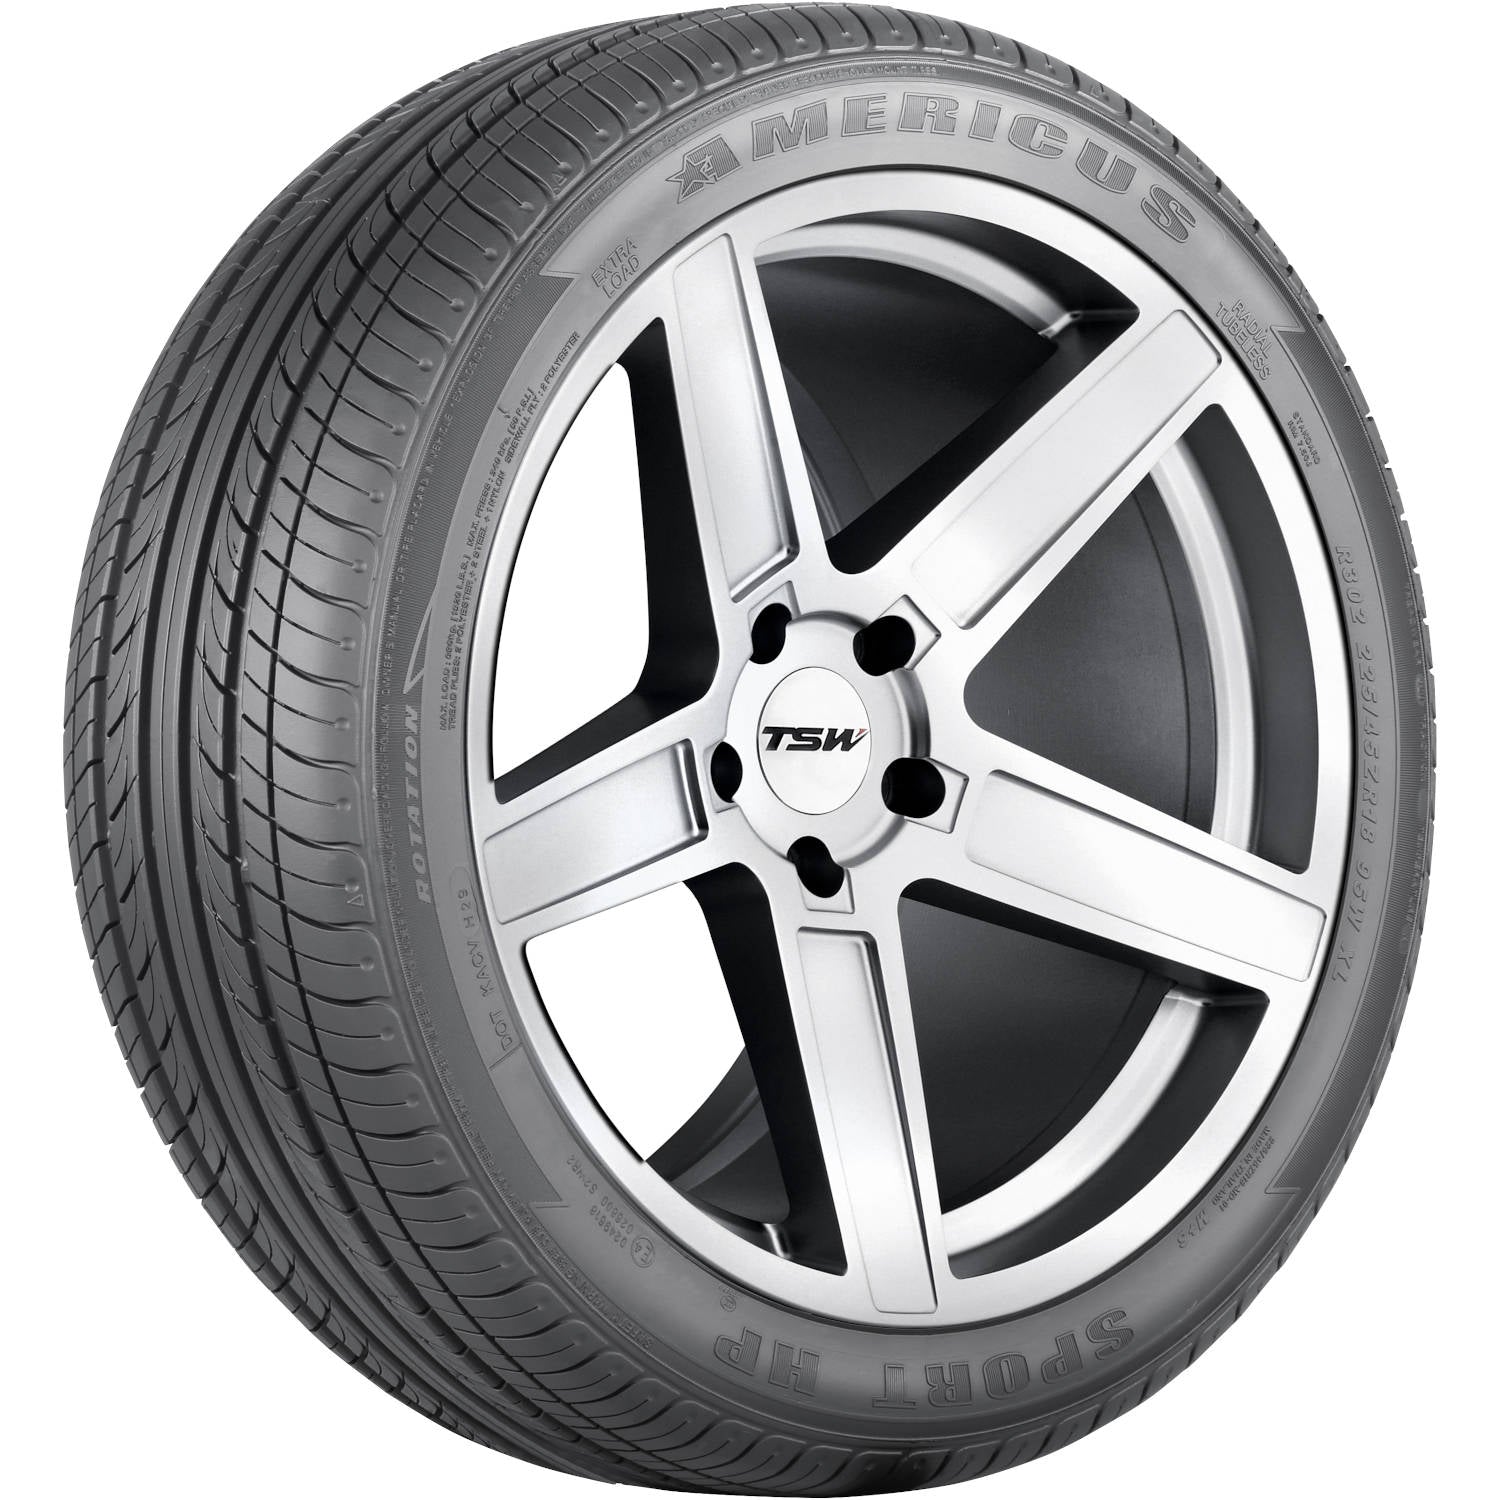 AMERICUS SPORT HP 205/55R16 (24.9X8.1R 16) Tires